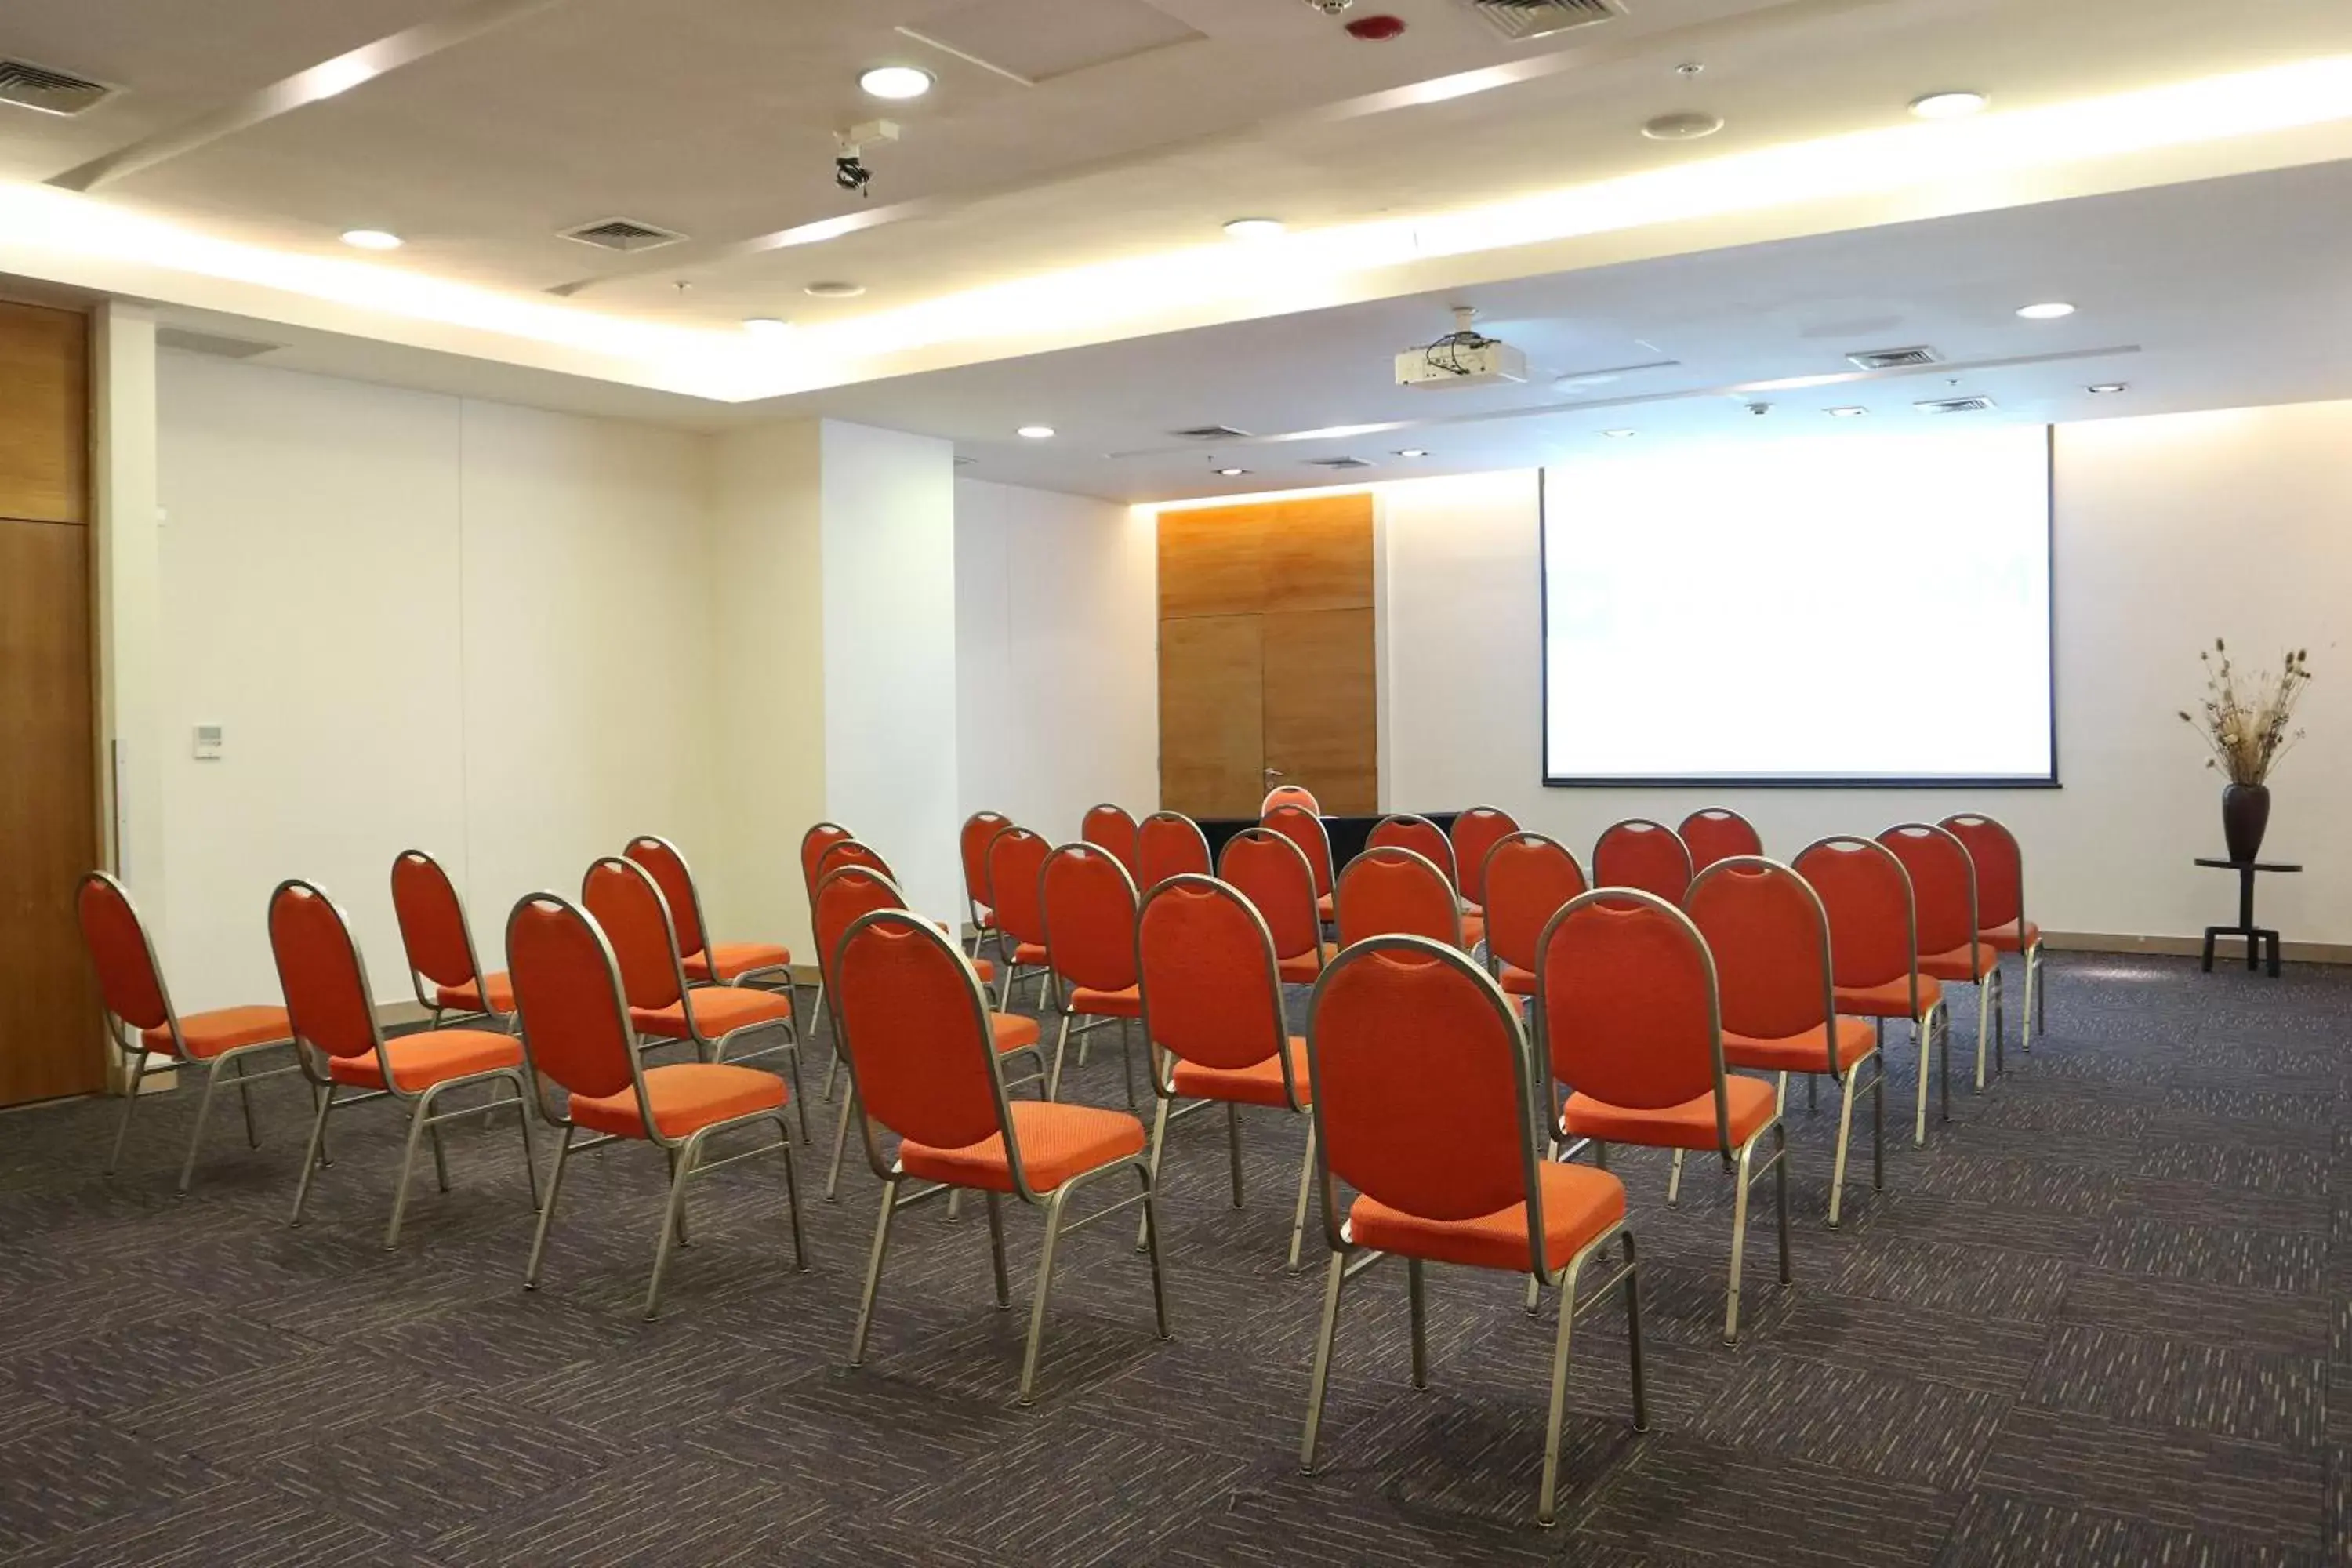 Meeting/conference room in Wyndham Concepcion Pettra